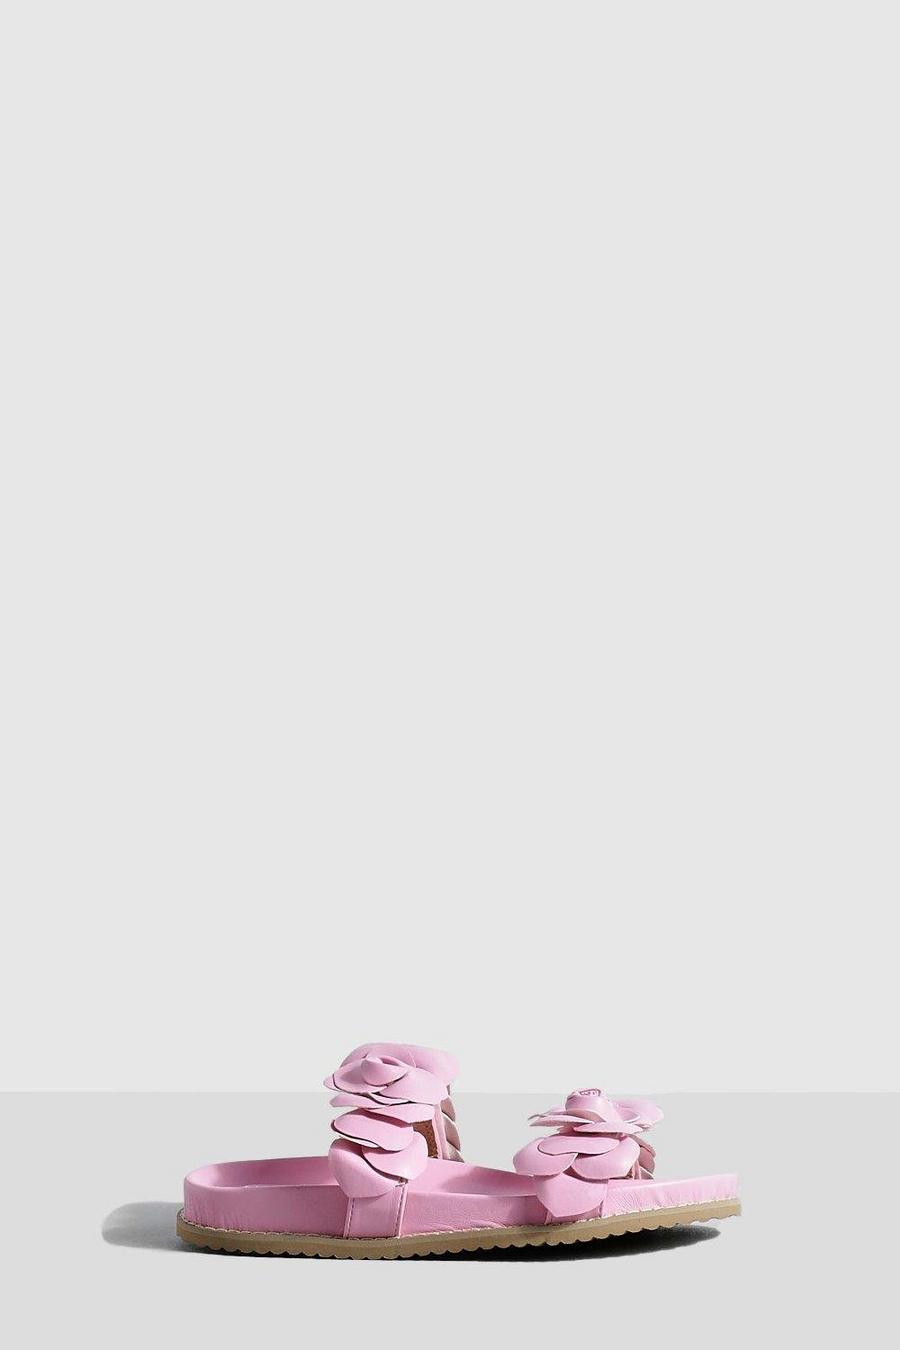 Sandales espadrilles fleuries, Pink rose